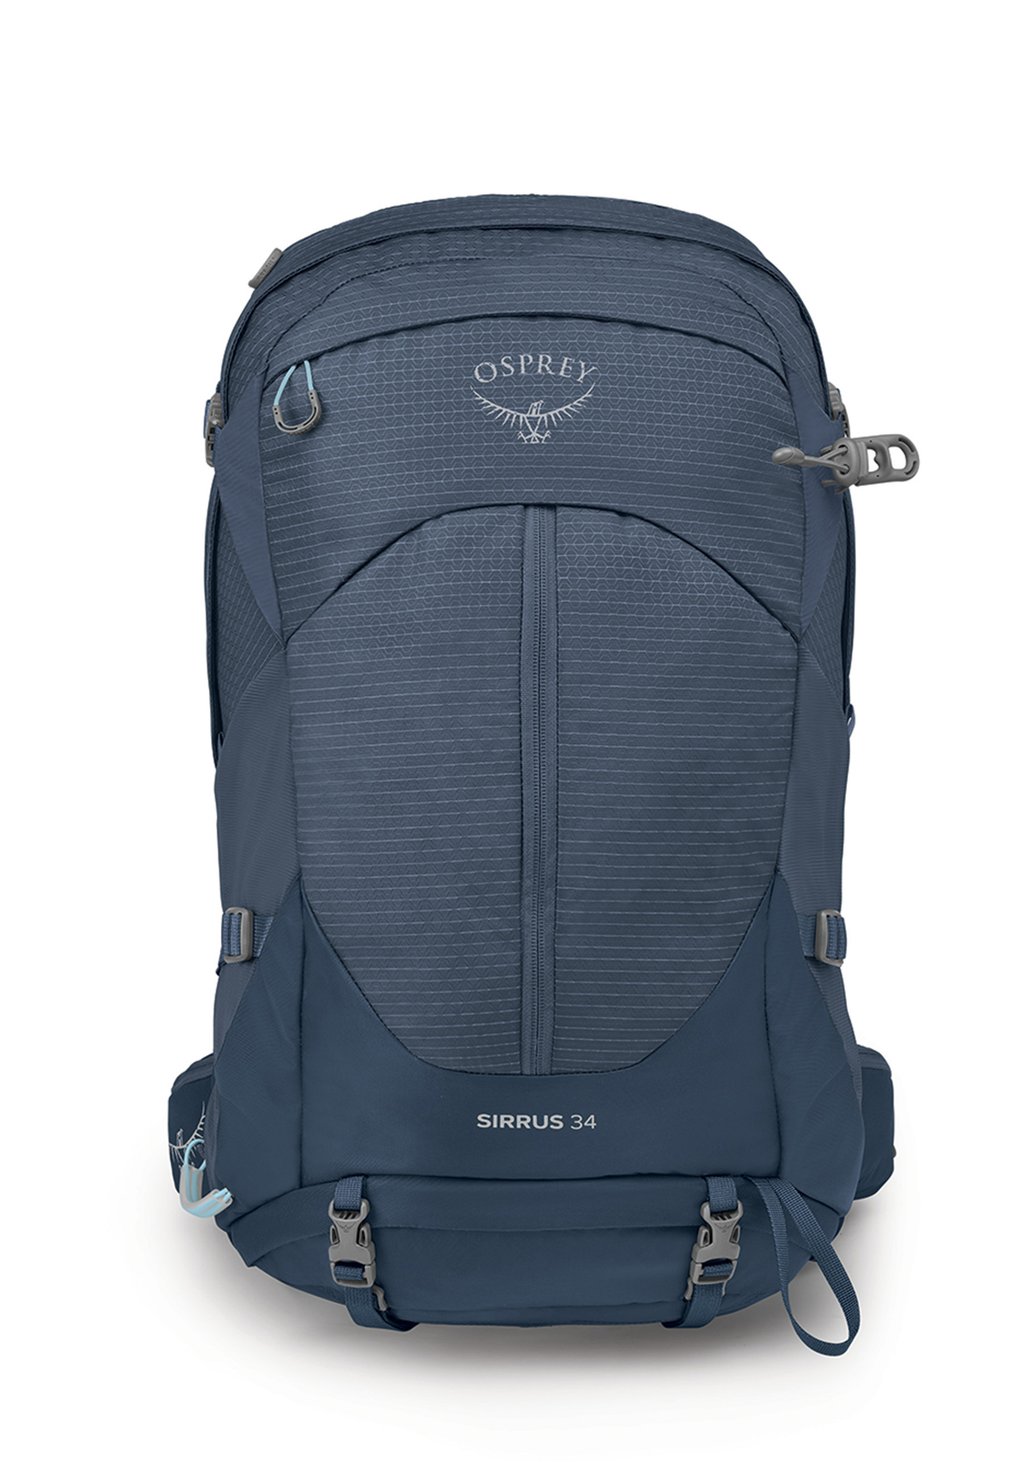 Туристический рюкзак SIRRUS Osprey, цвет muted space blue туристический рюкзак sirrus osprey цвет muted space blue